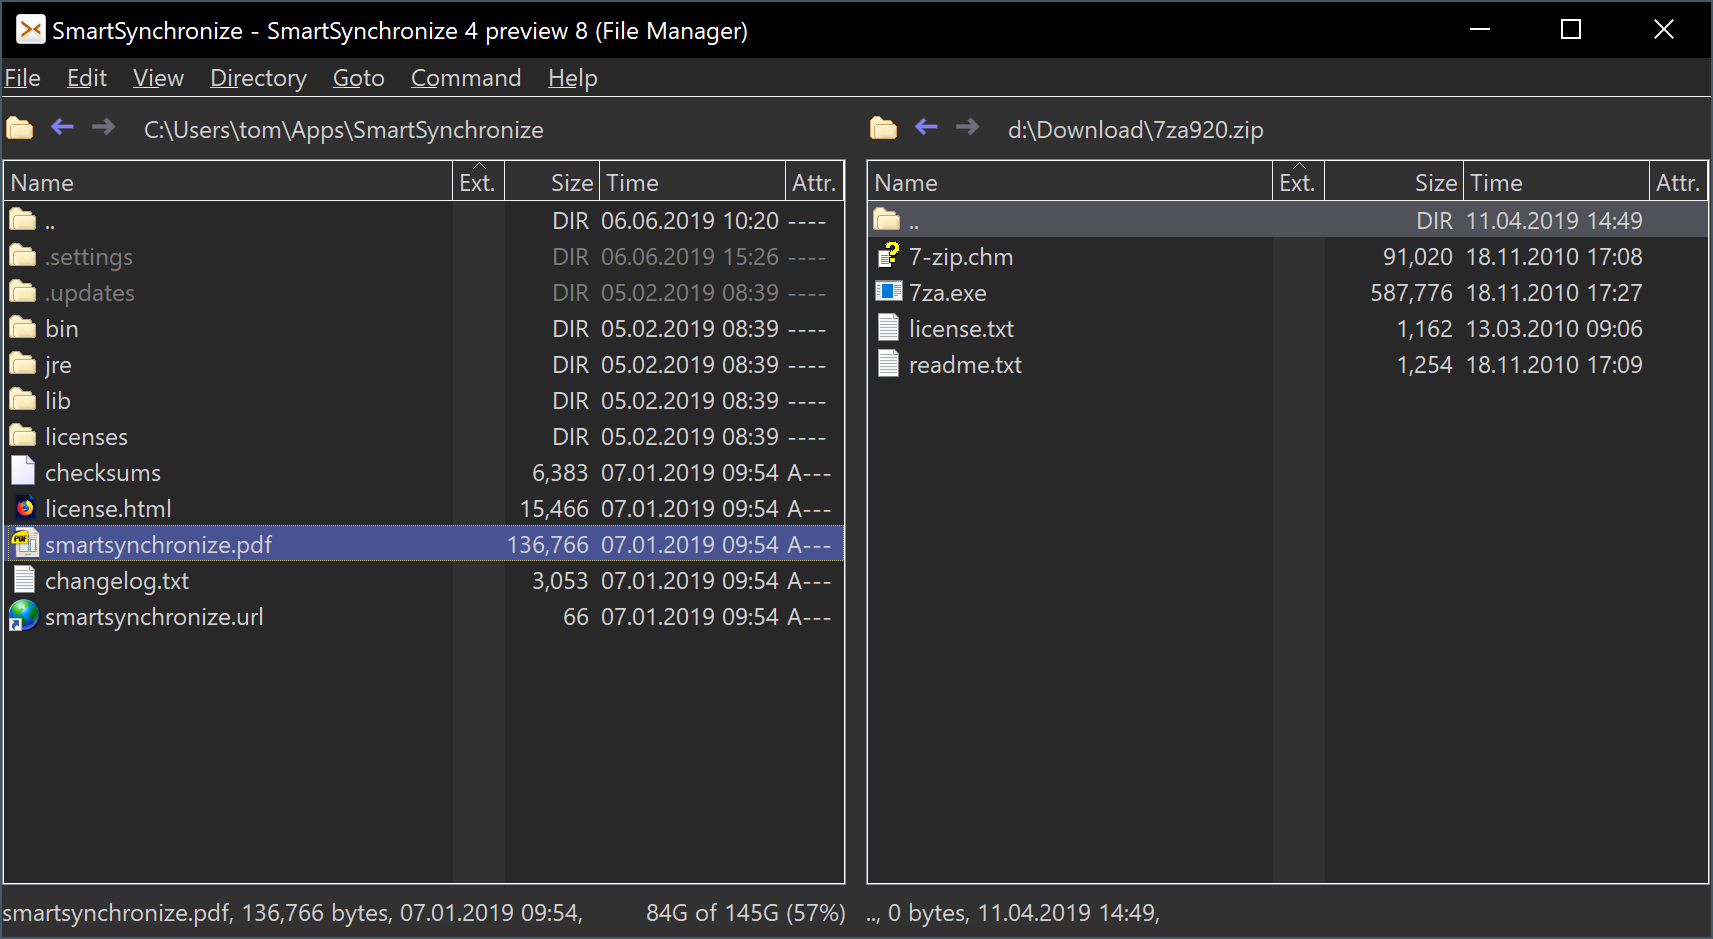 SmartSynchronize dual-pane File Manager